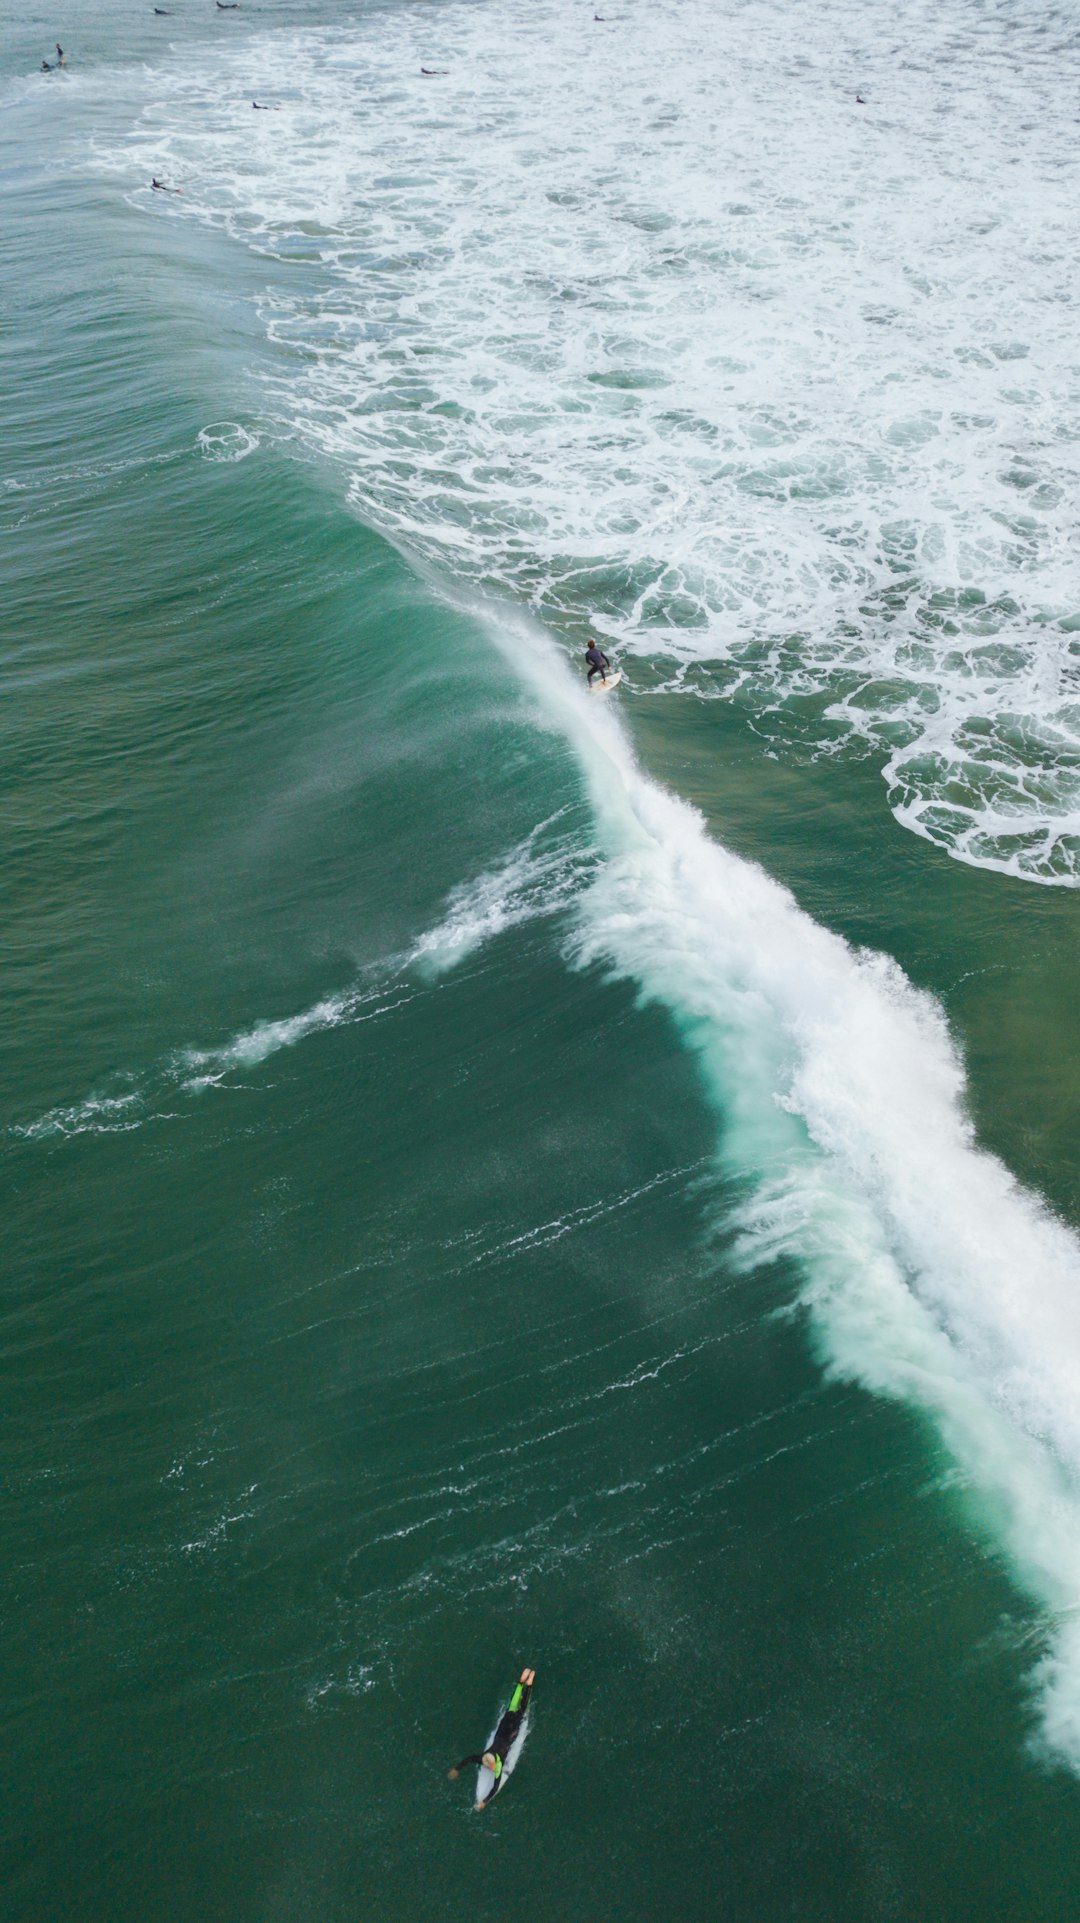 Surfing photo spot Sydney Broome